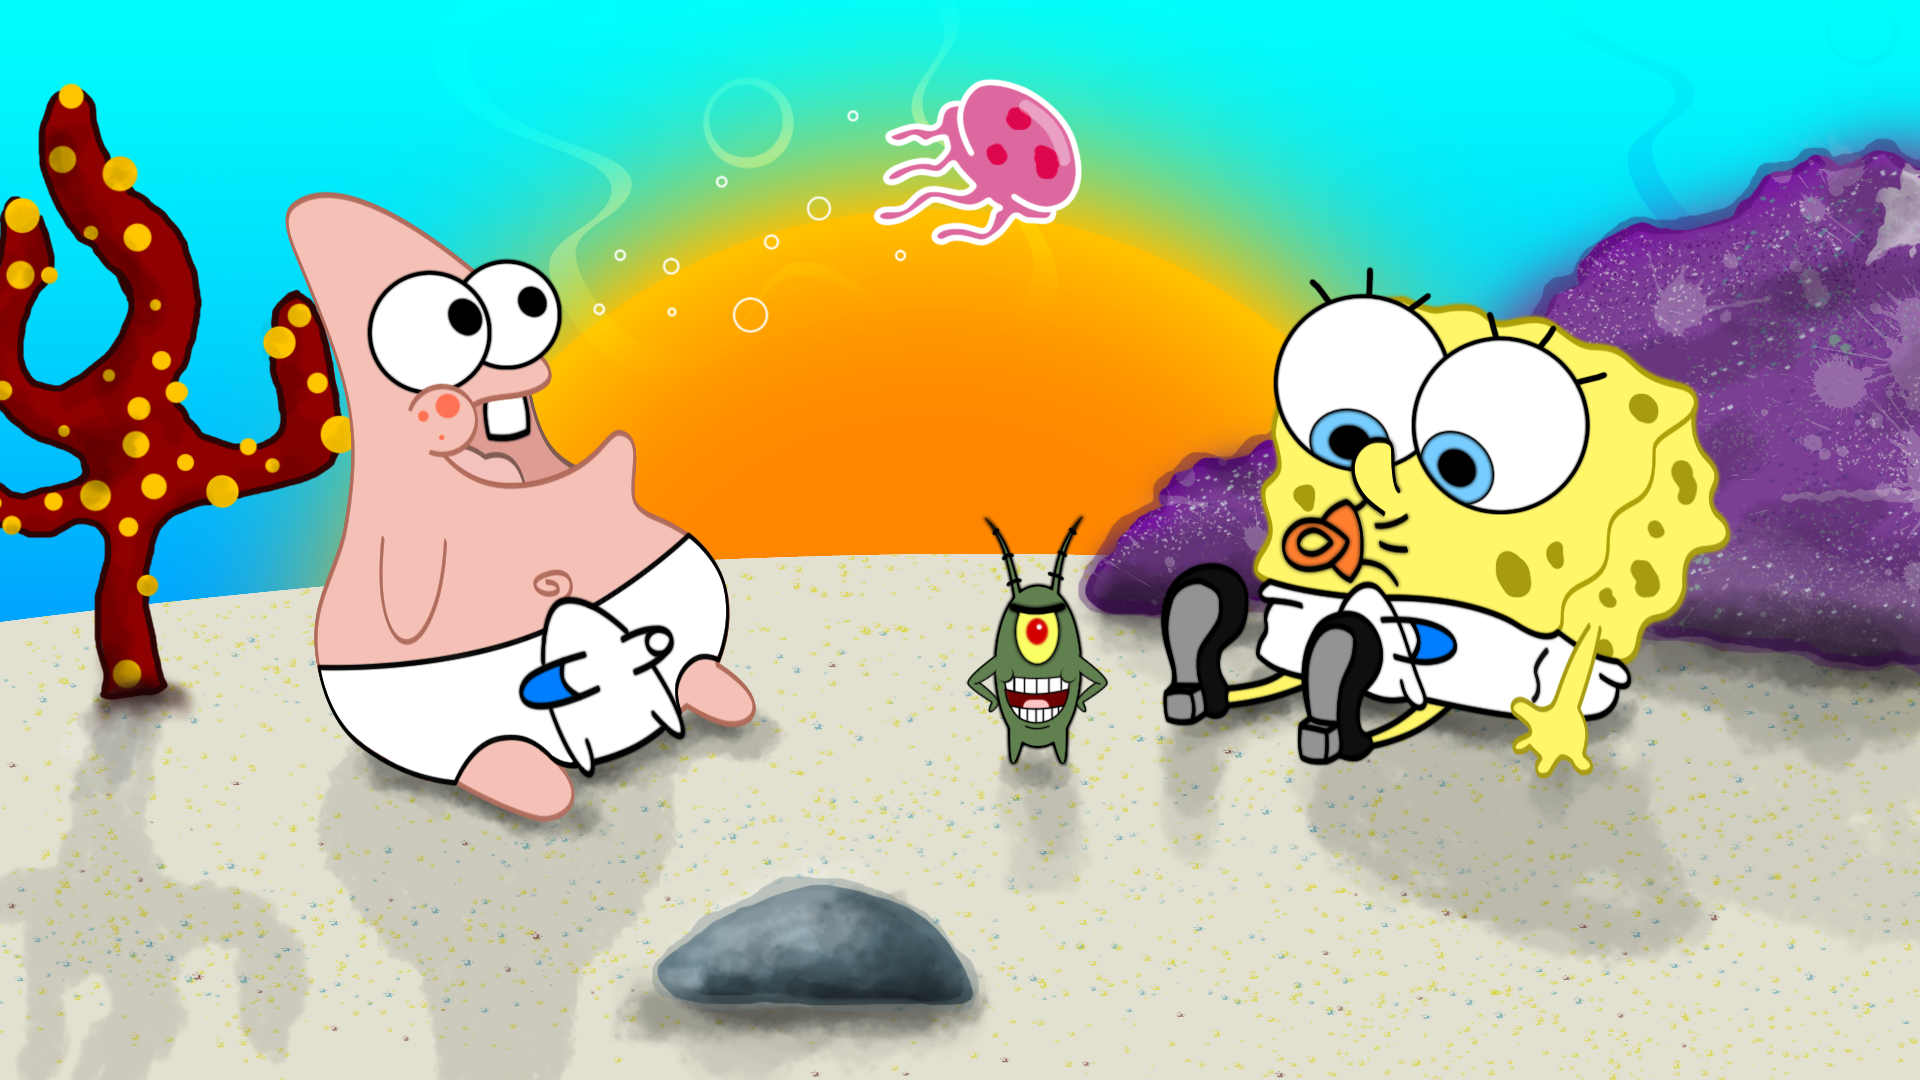 ... Spongebob Squarepants And Patrick Star Baby ...